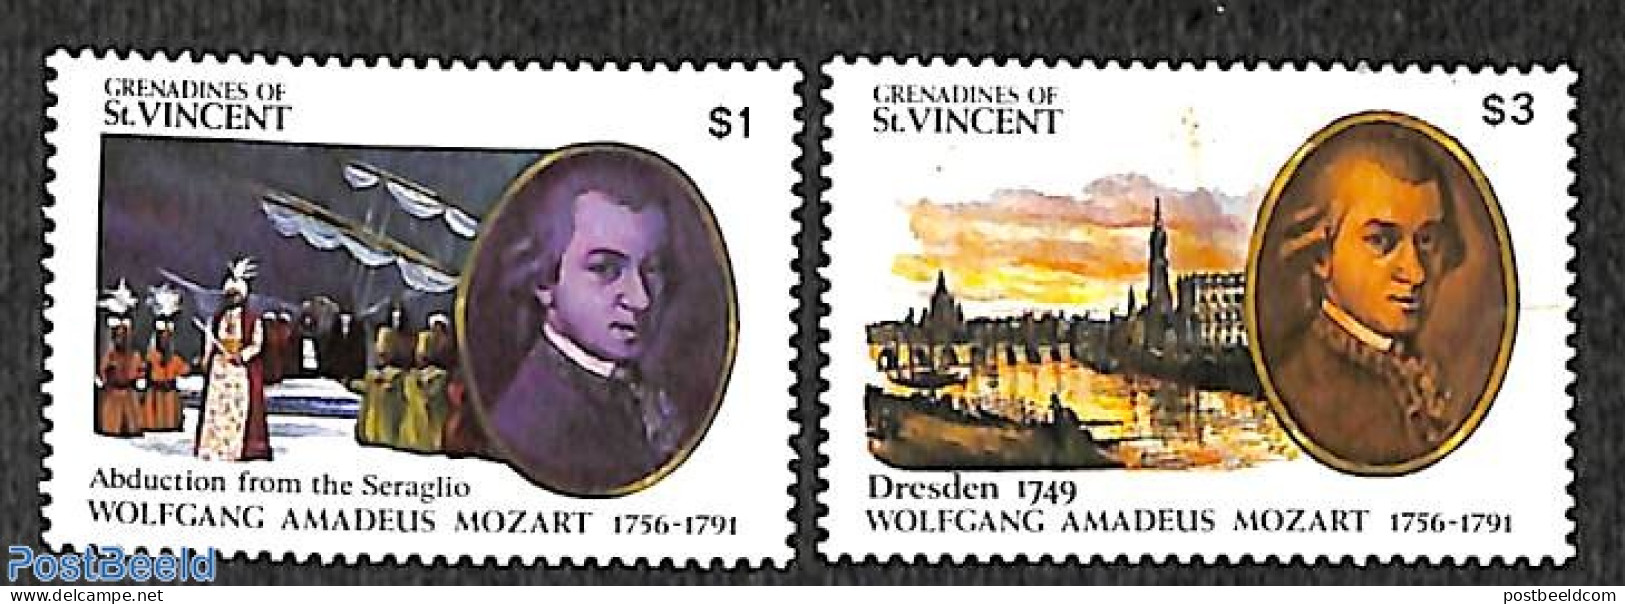 Saint Vincent & The Grenadines 1991 Mozart 2v, Mint NH, Performance Art - Amadeus Mozart - Music - Music